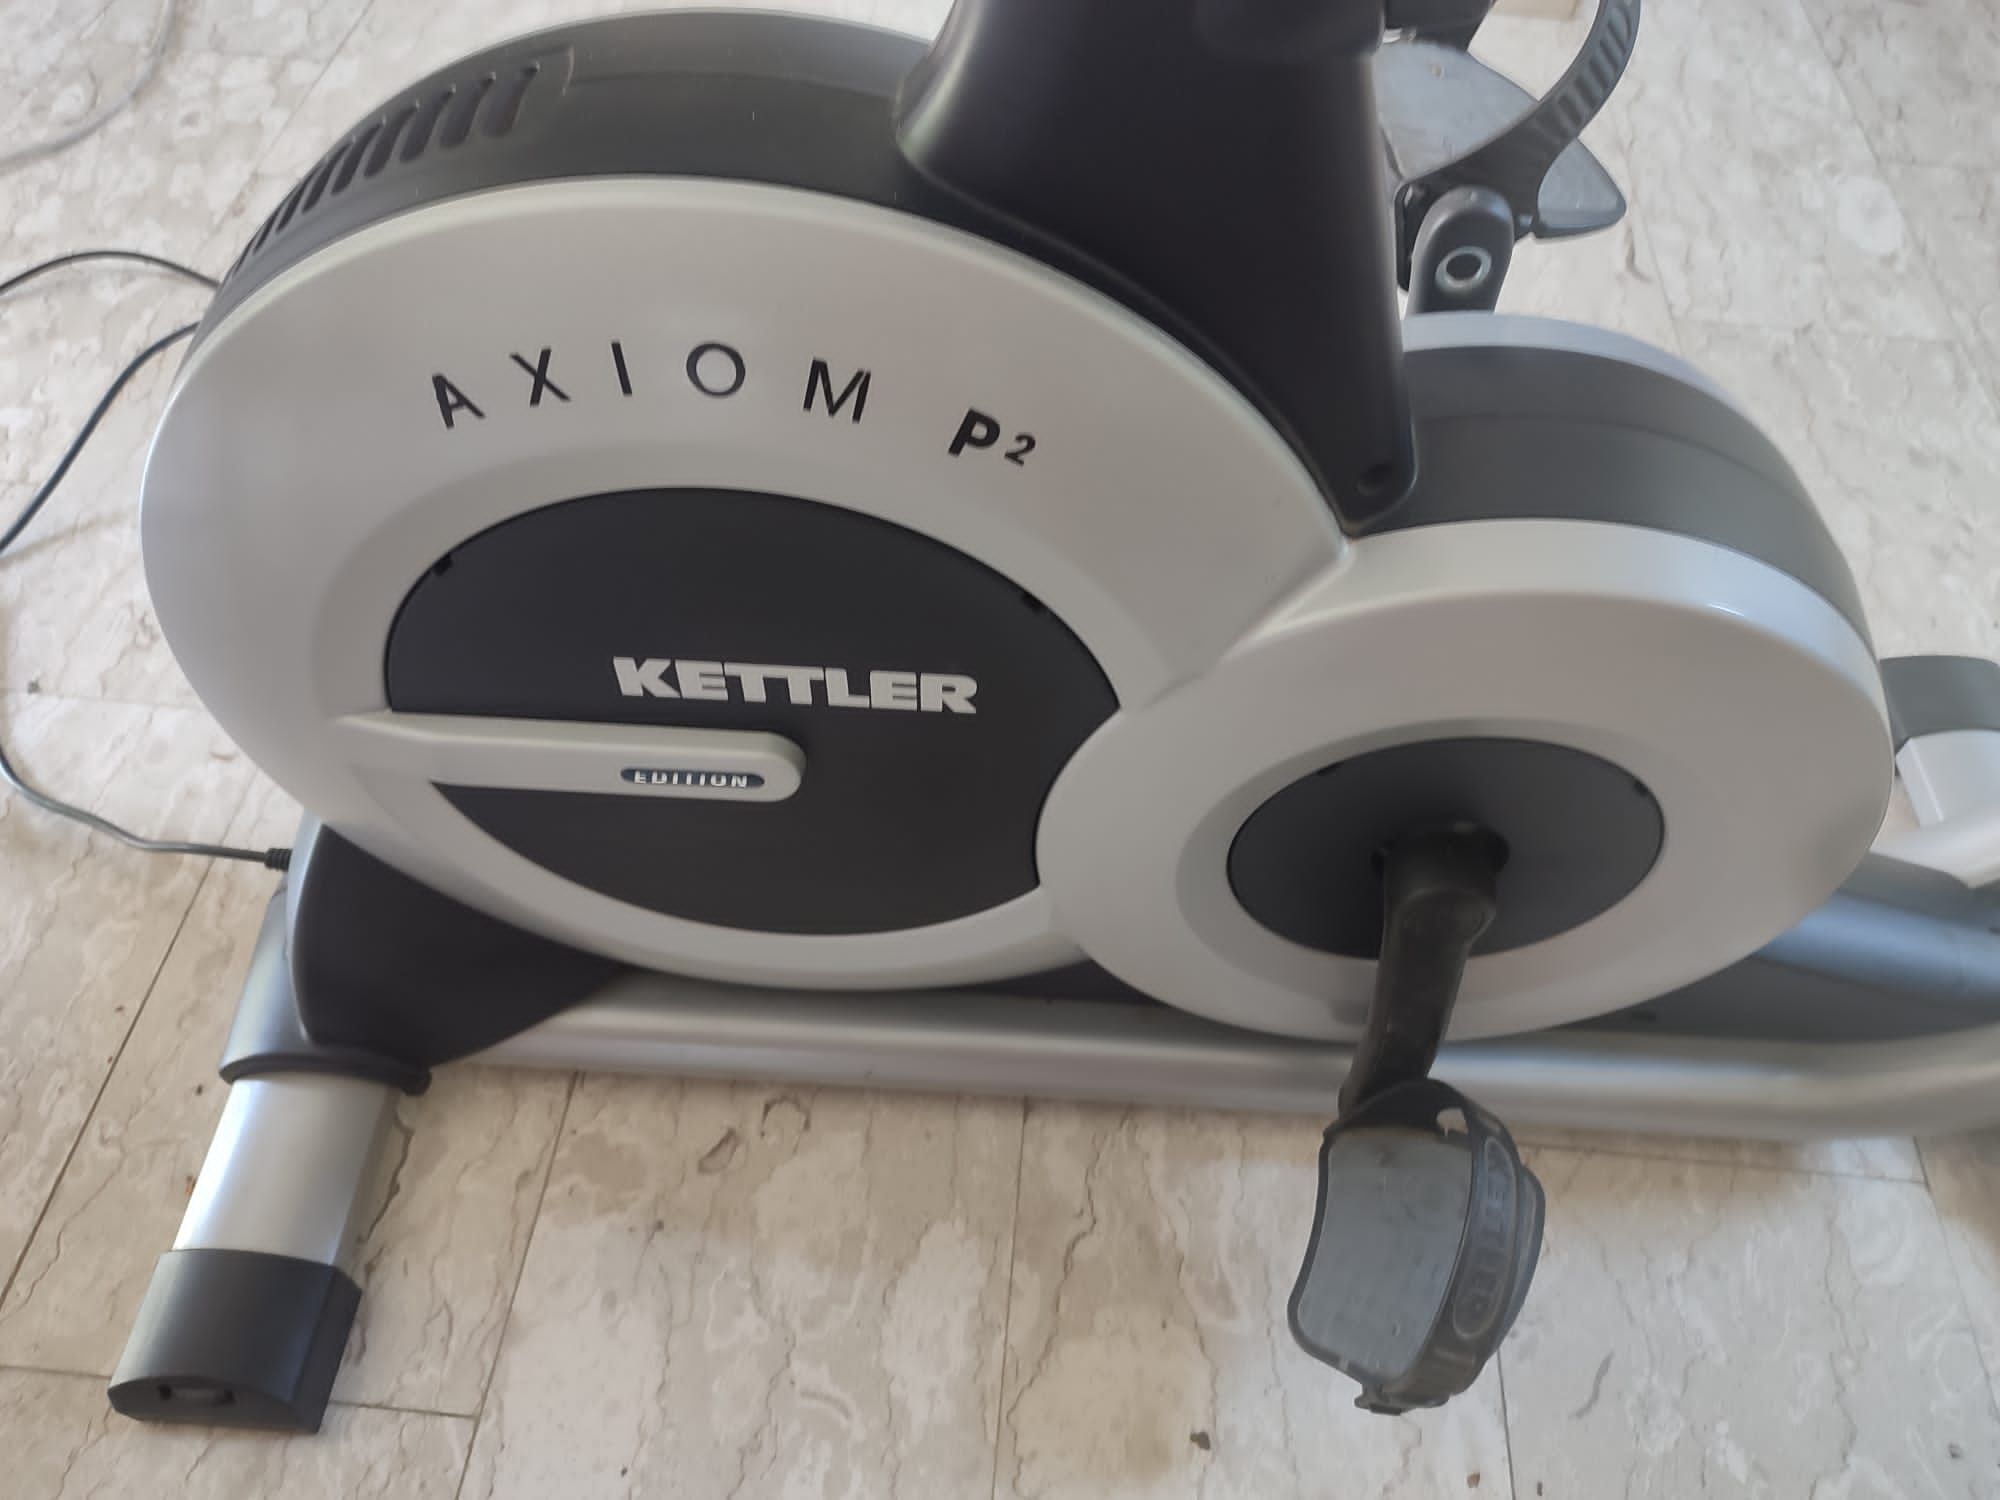 Kettler Axiom p2 rowerek treningowy